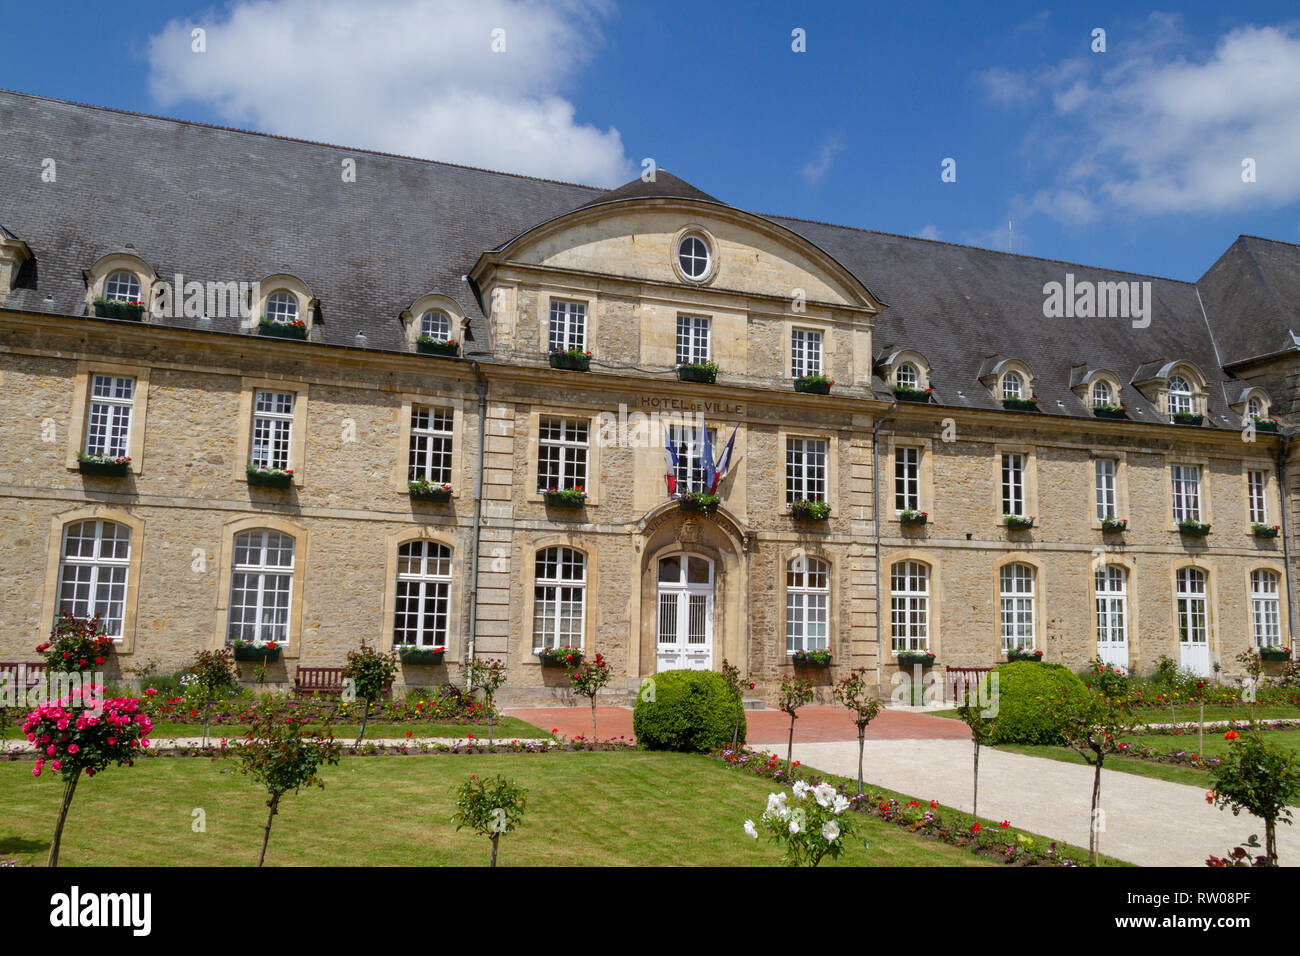 The Hotel De Ville in Carentan, Normandy, France. Stock Photo